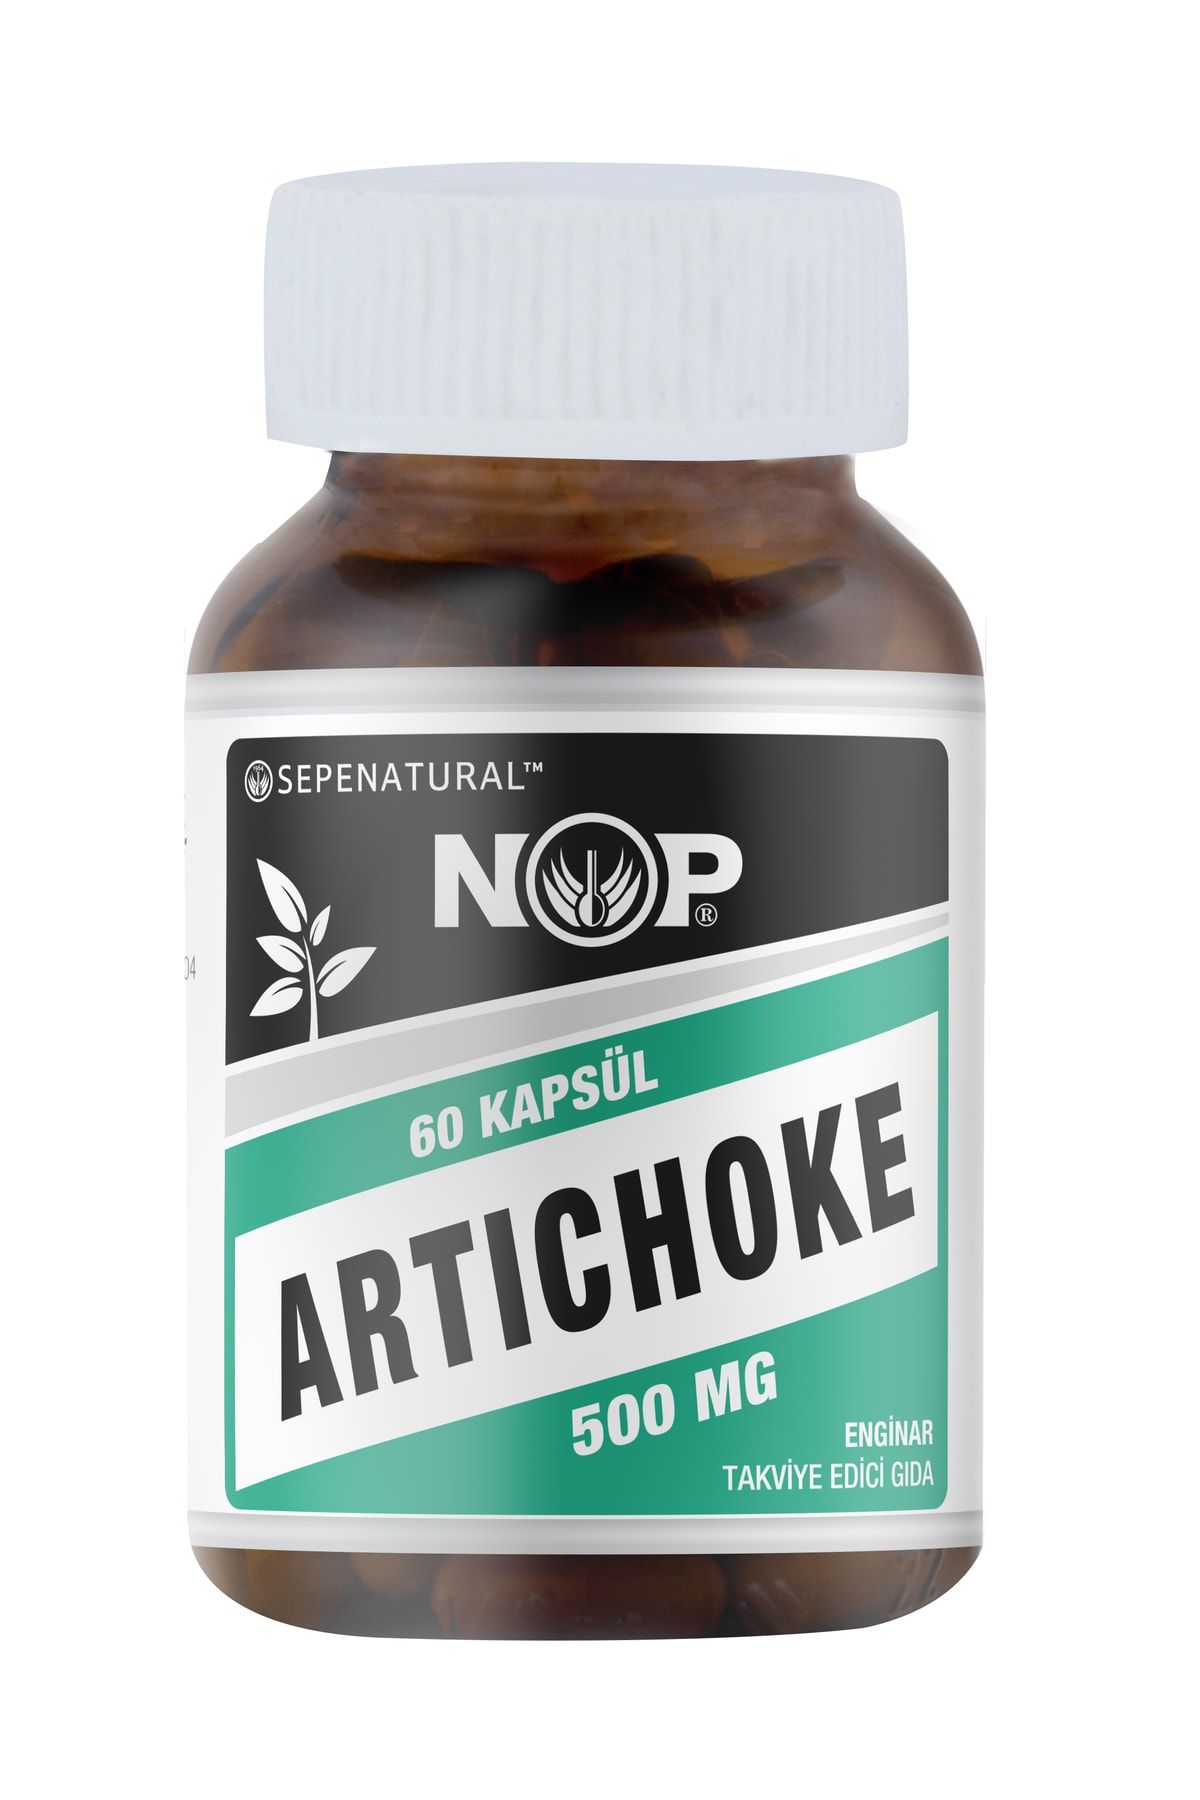 Sepe Natural Nop Enginar 60 Kapsül 500 mg Artichoke 60 Kapsül